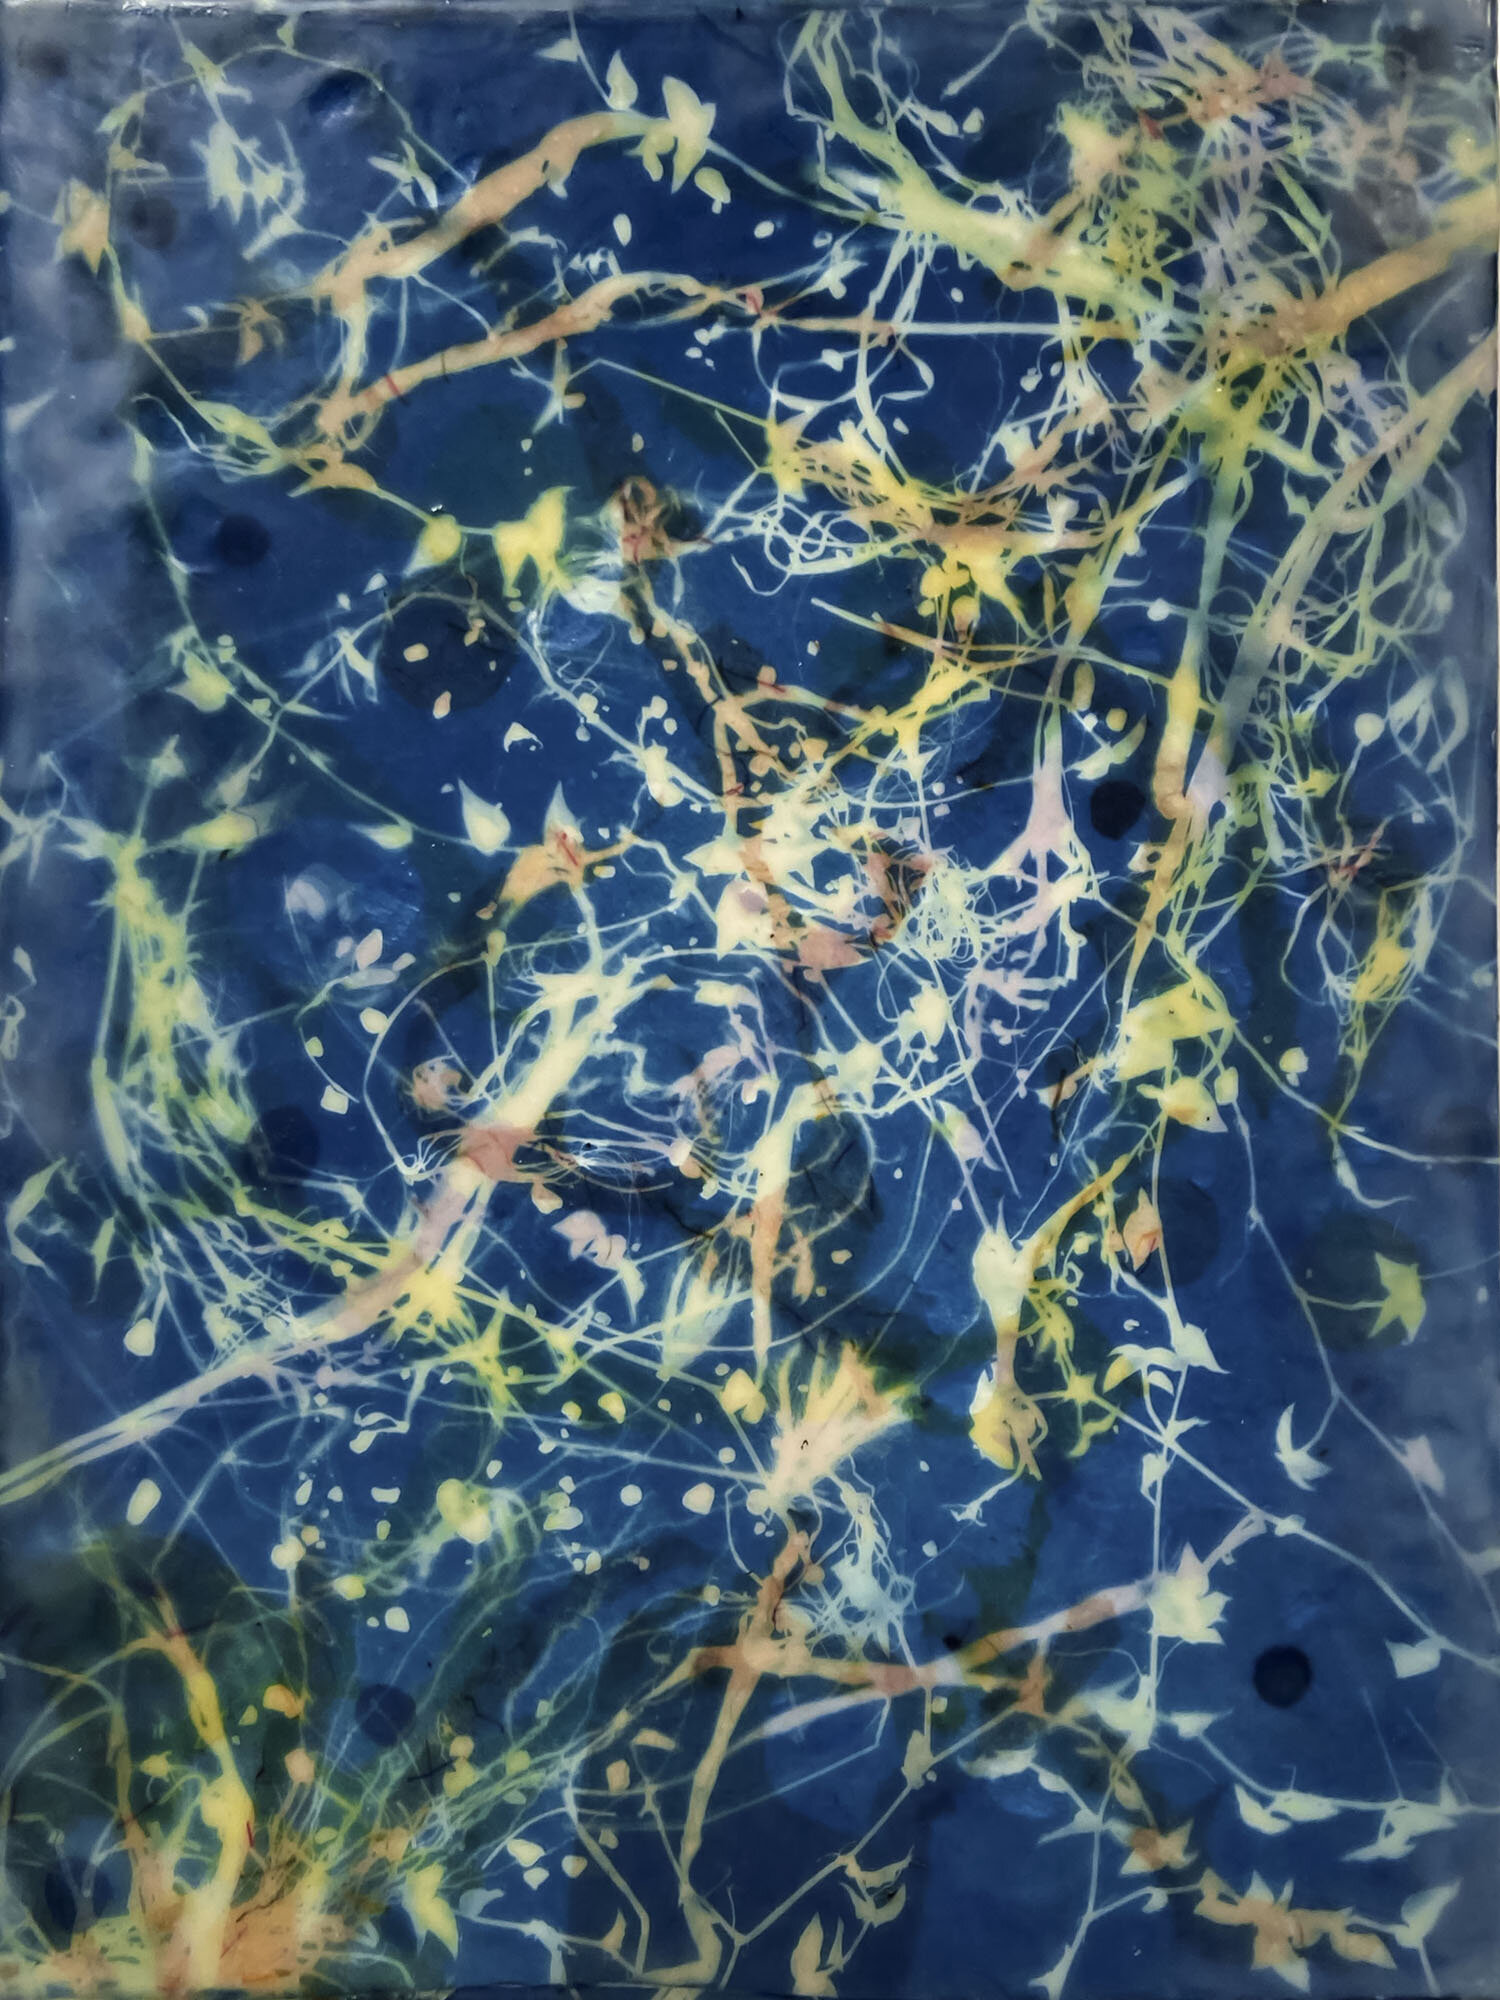   Underwater Tobago II,  2020  Cyanotype on Japanese rice paper, colored Japanese rice papers, wax,  encaustic board   12” x 16” 